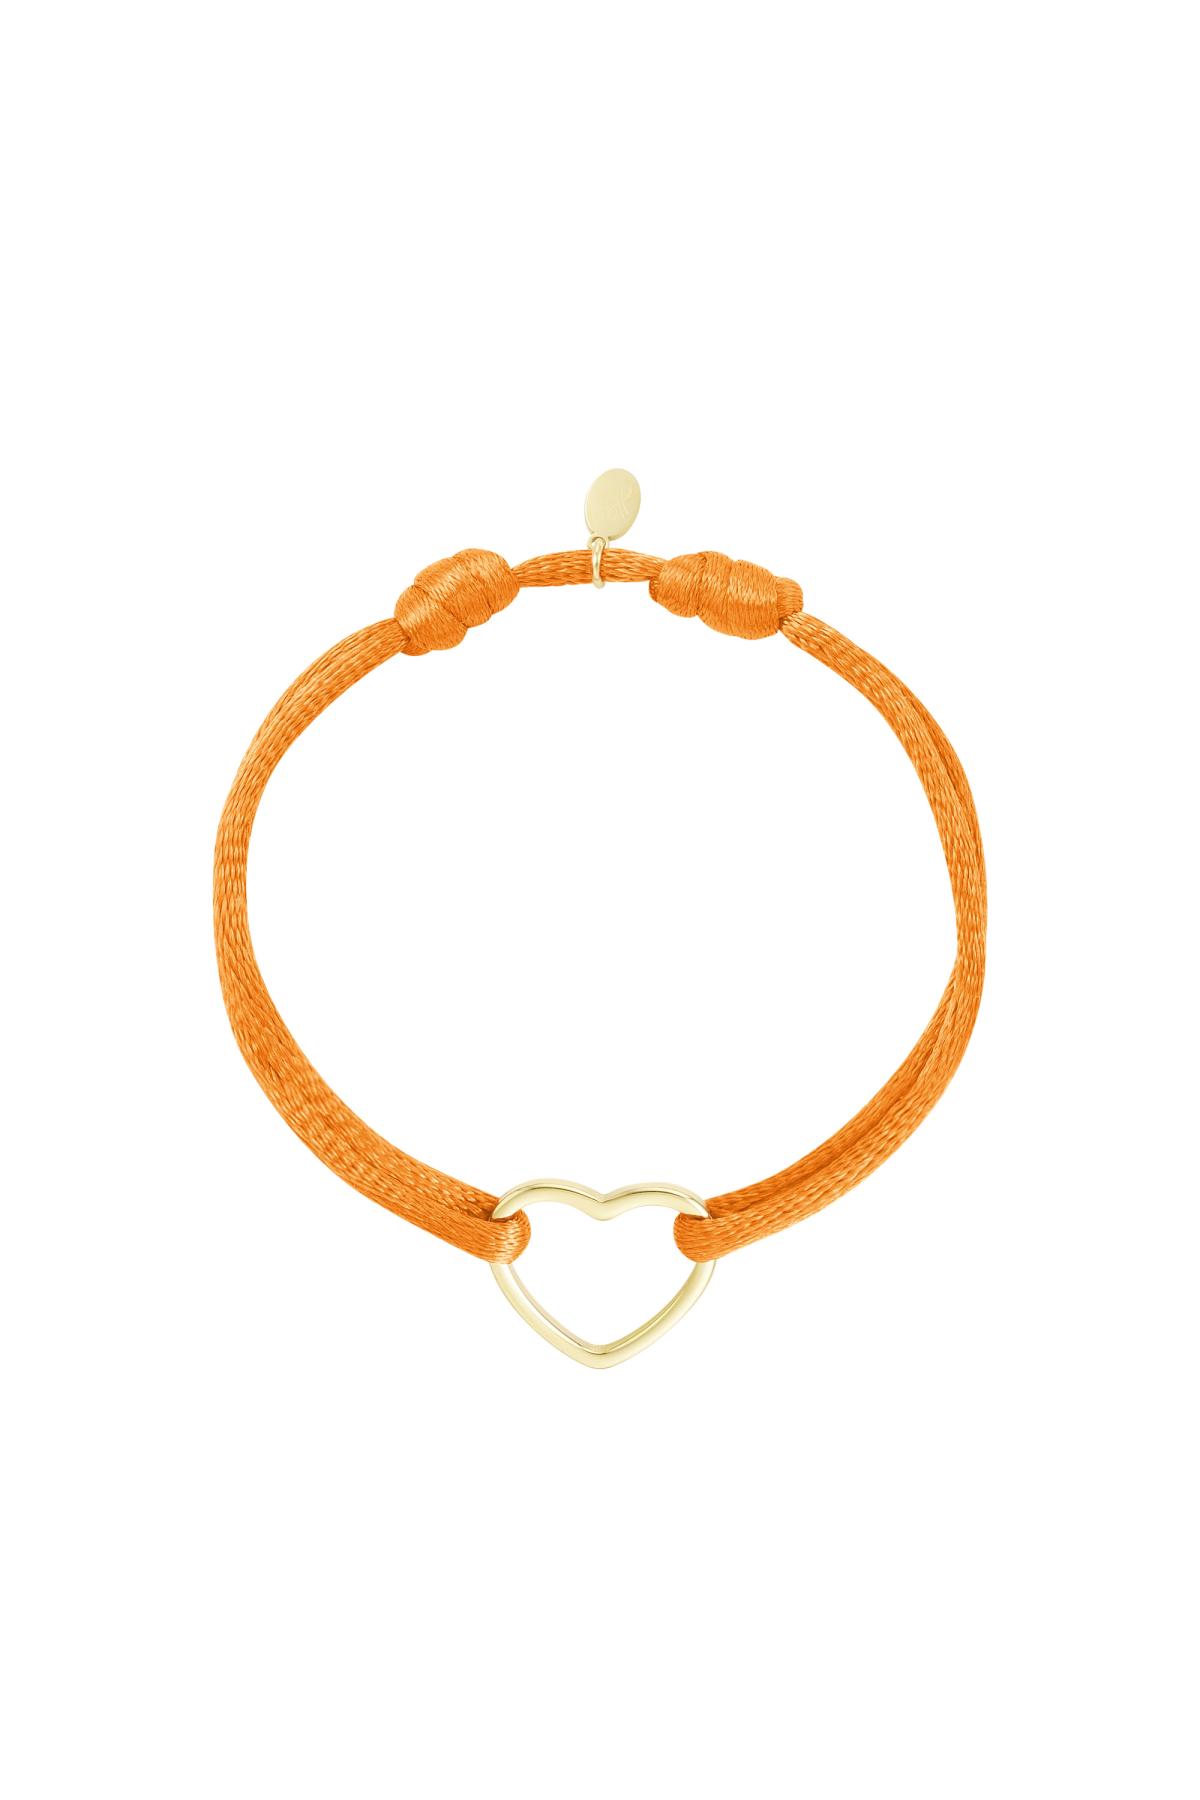 Fabric bracelet heart Orange & Gold Stainless Steel h5 